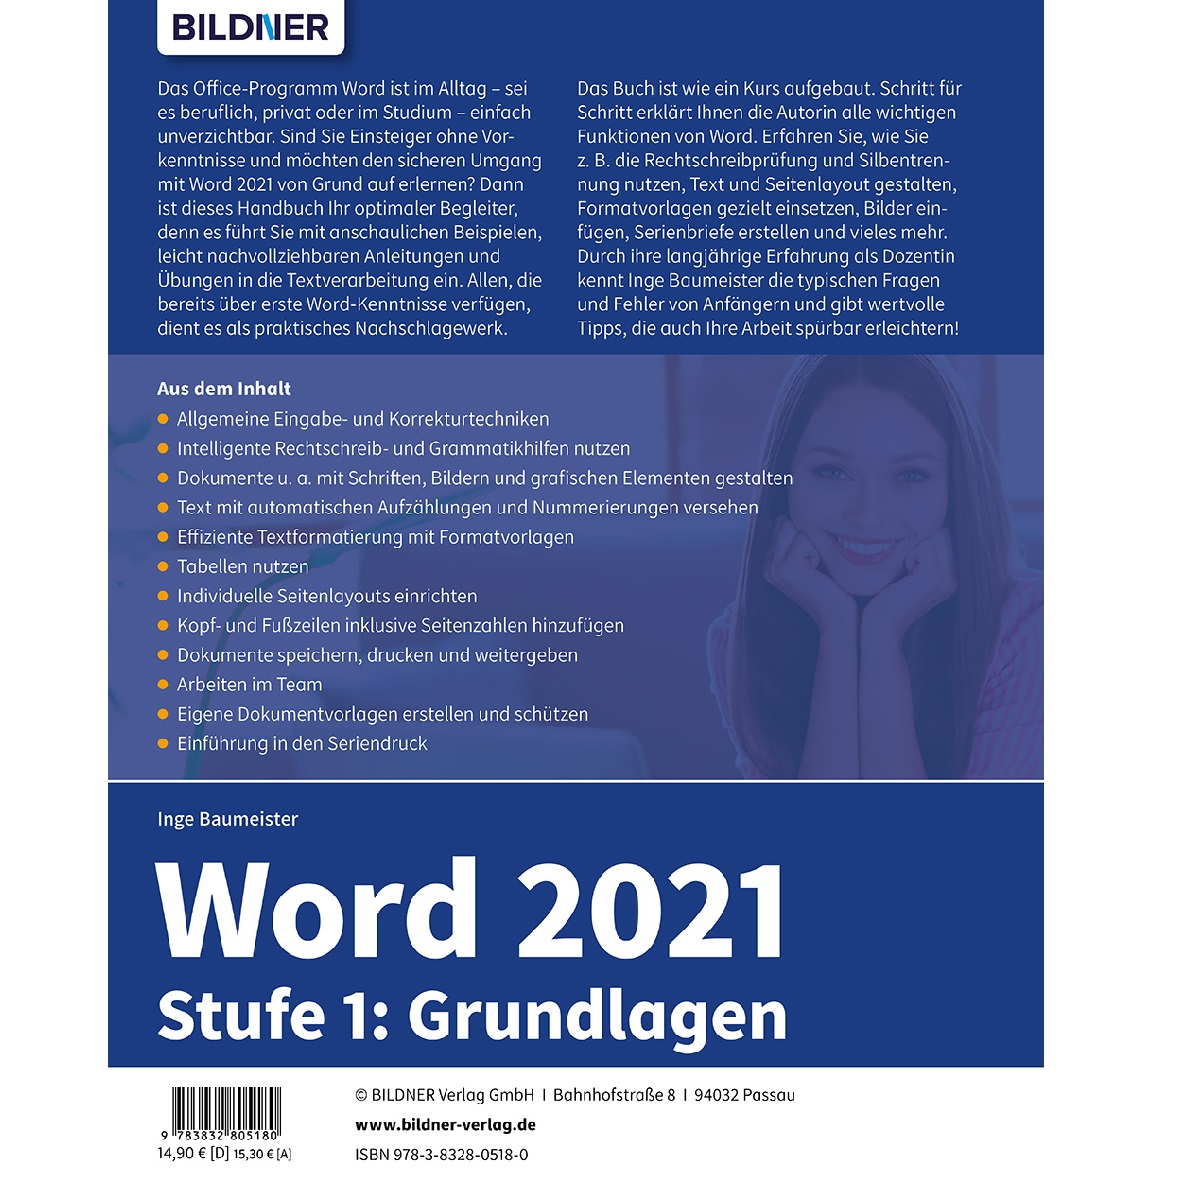 Word 2021 - Stufe Grundlagen 1